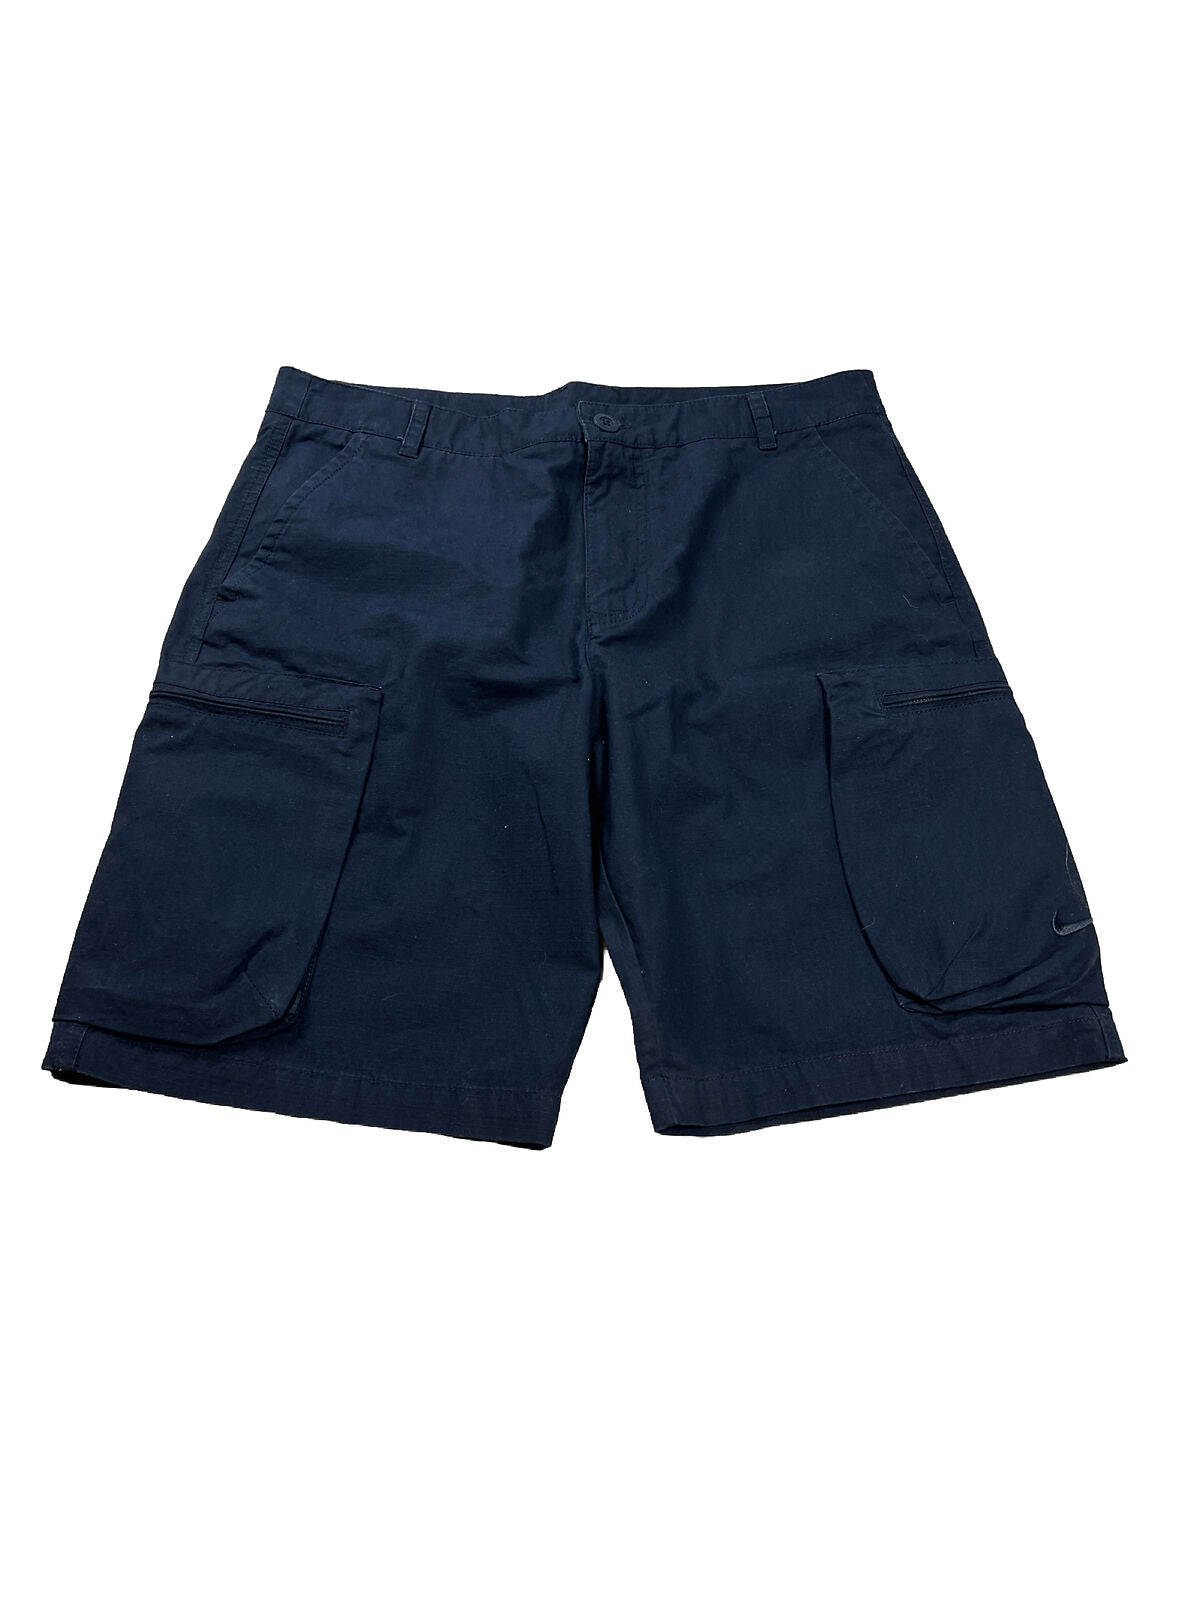 NEW Nike Men's Navy Blue Coven Cotton Cargo Shorts - 34